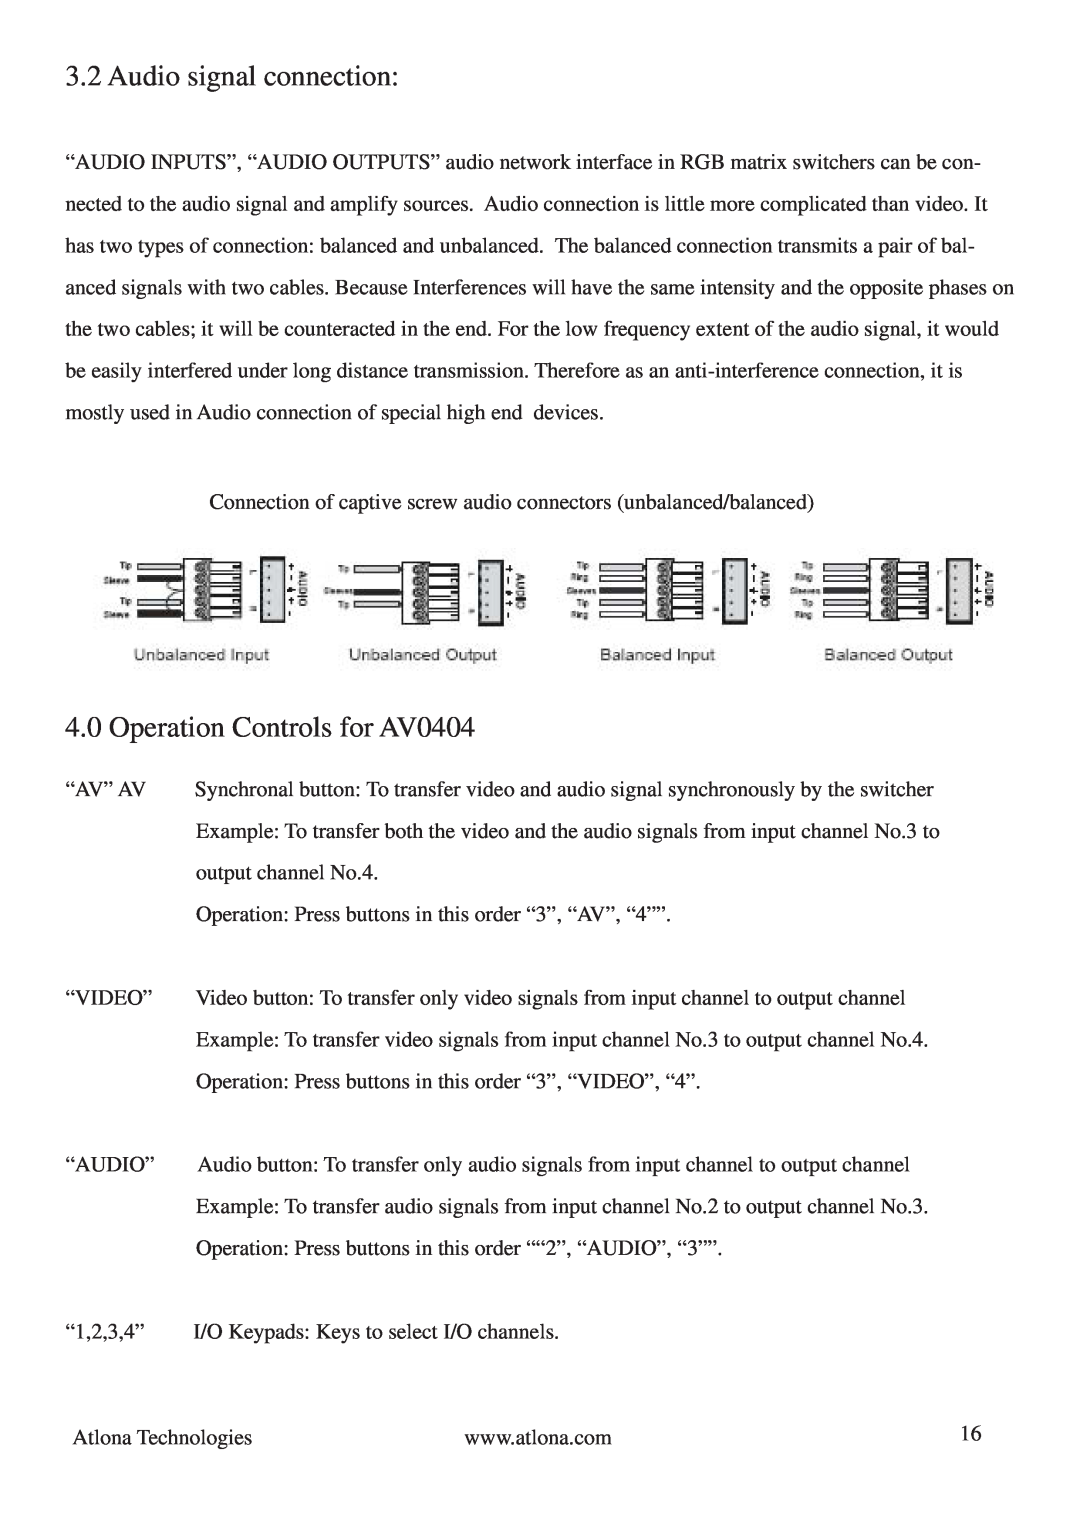 Atlona AV128128 manual Audio signal connection, Operation Controls for AV0404 